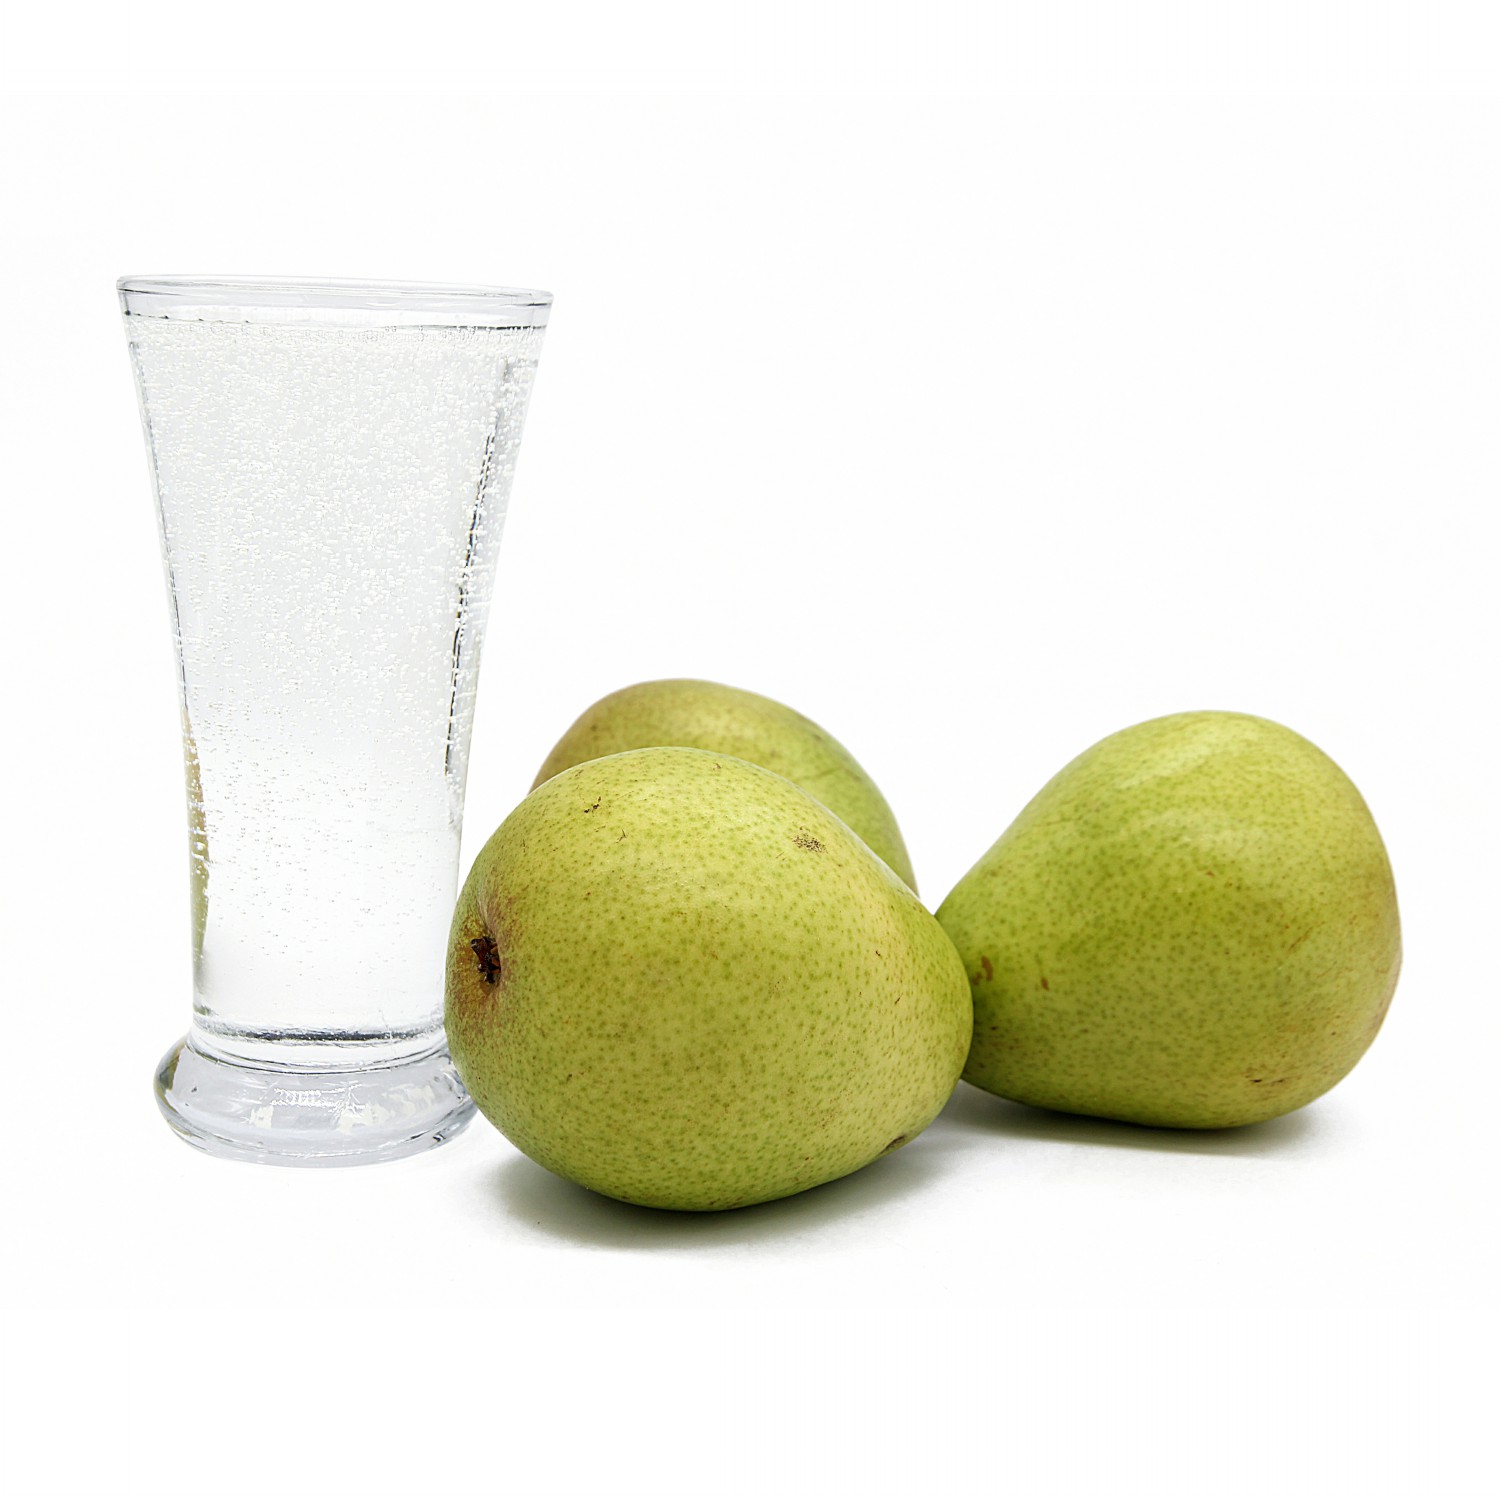 Deionized pear juice concentrate